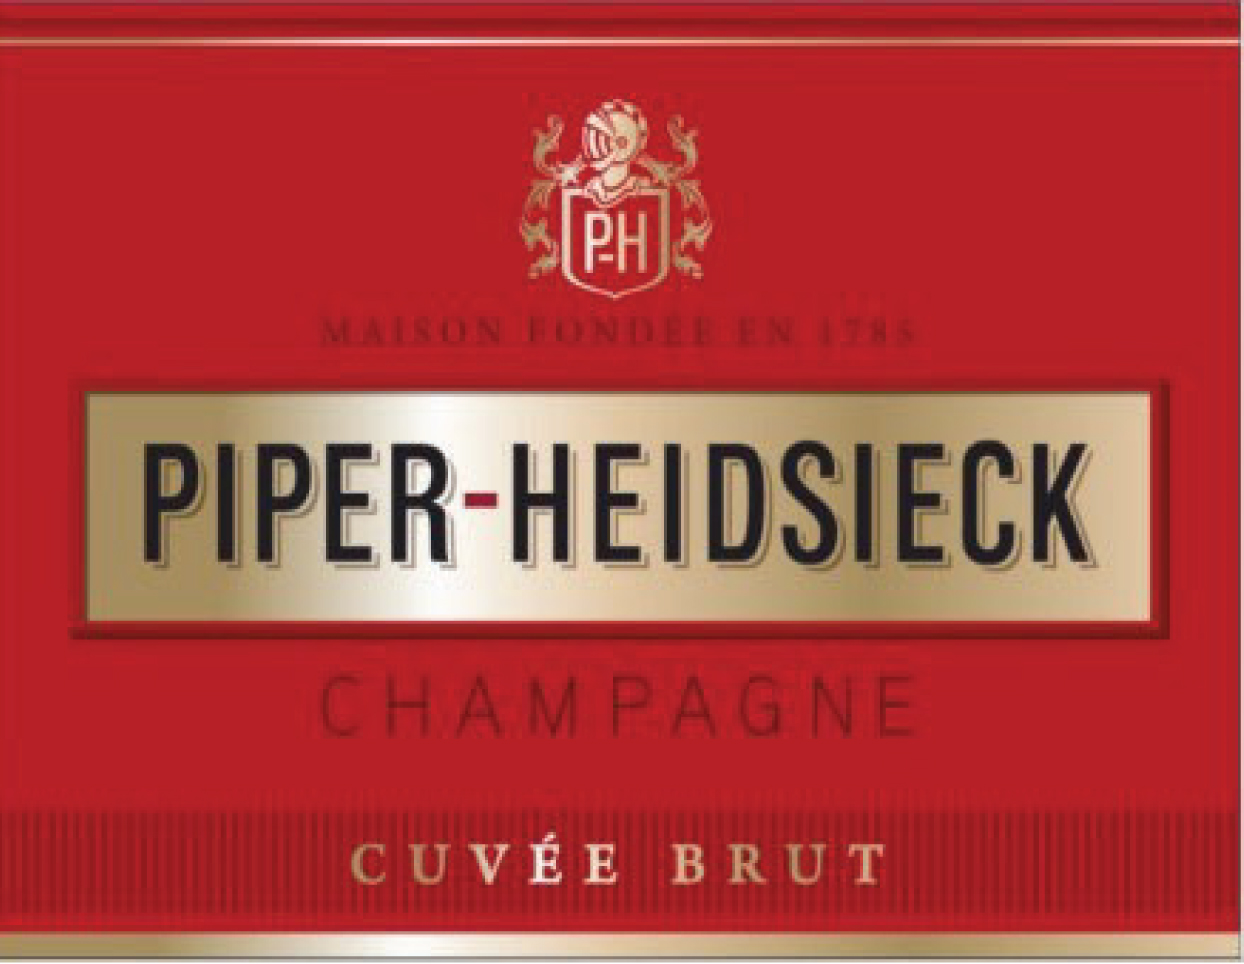 Piper-Heidsieck - Cuvee Brut label